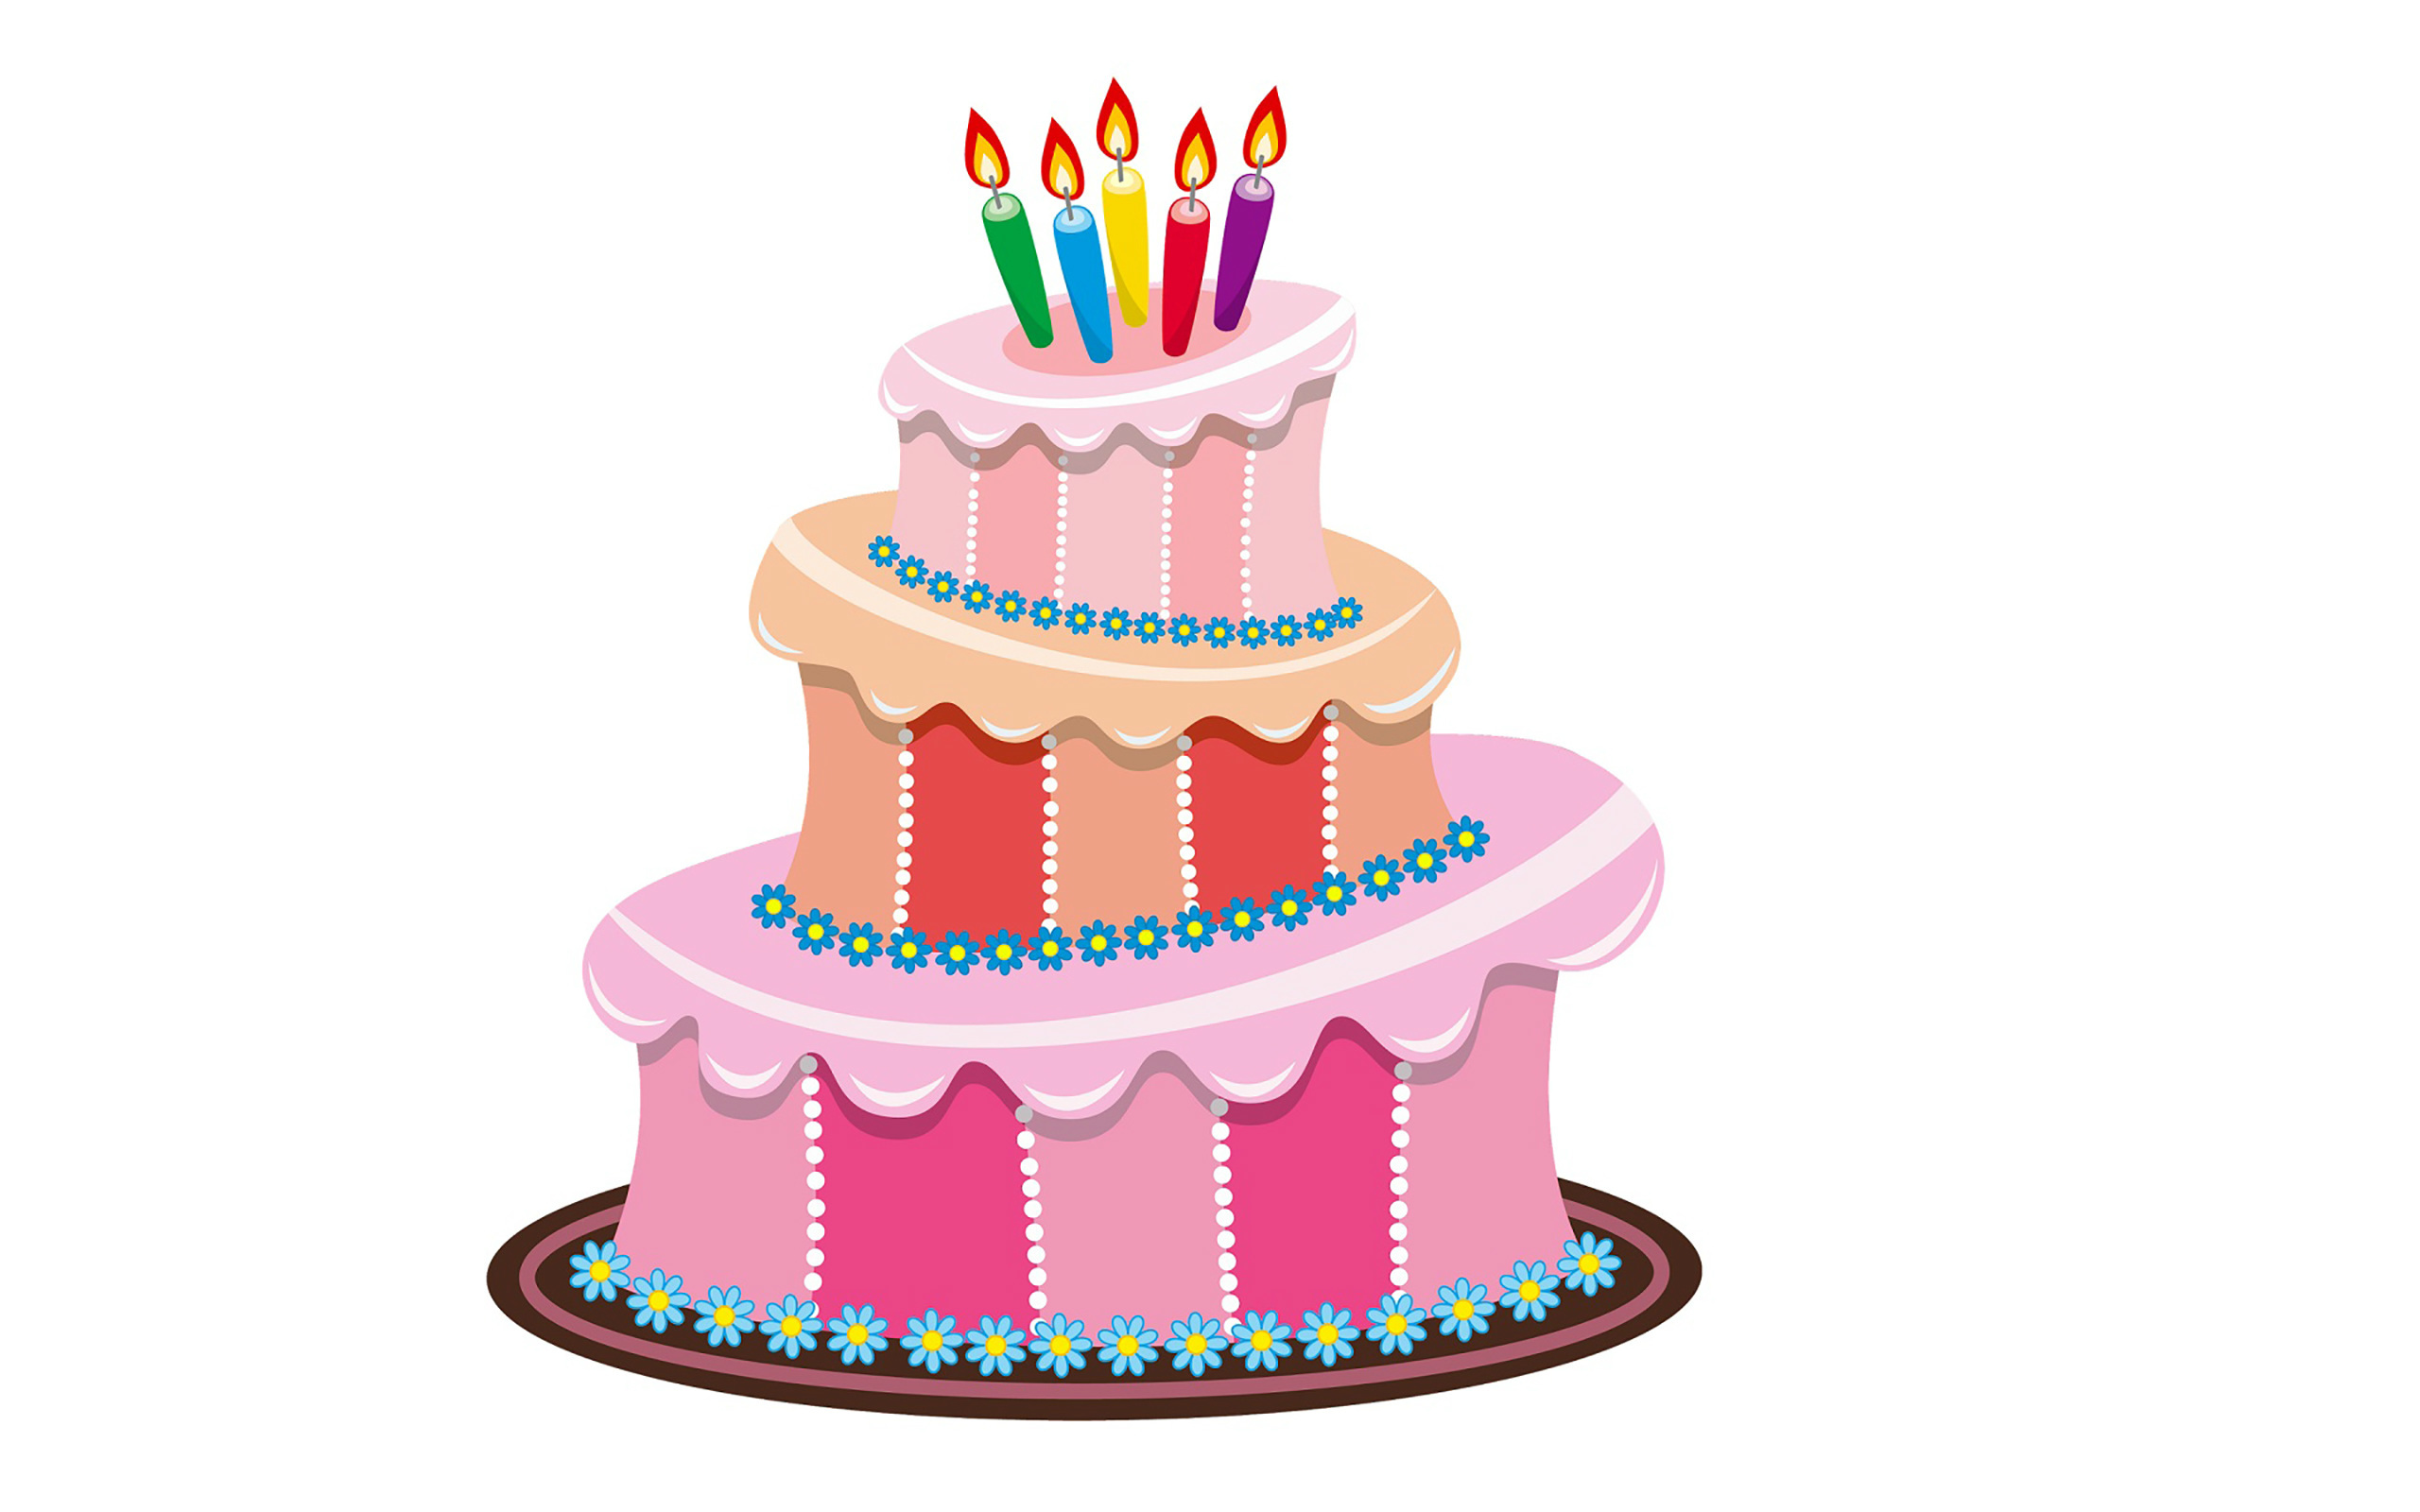 Happy Birthday Cake Cartoon Cake For Celebration Or Anniversary Stock  Illustration - Download Image Now - iStock